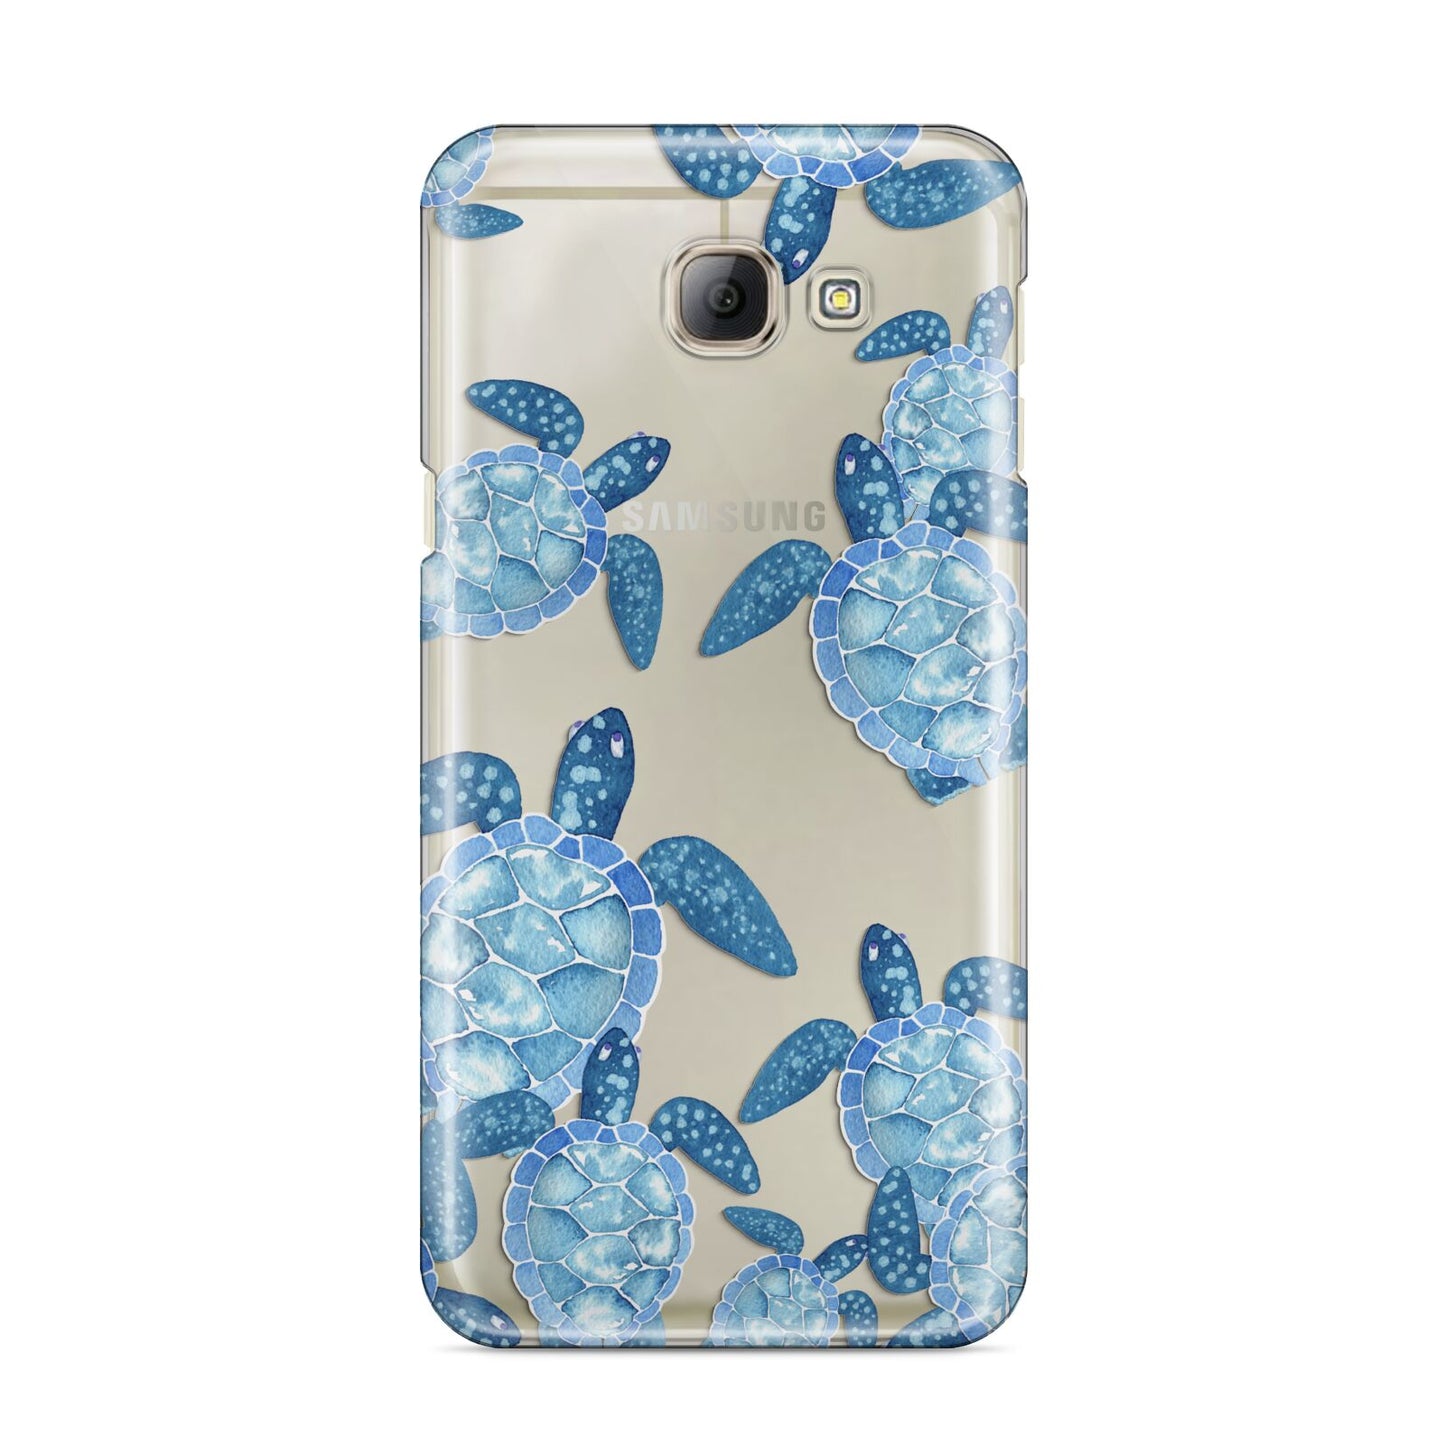 Turtle Samsung Galaxy A8 2016 Case